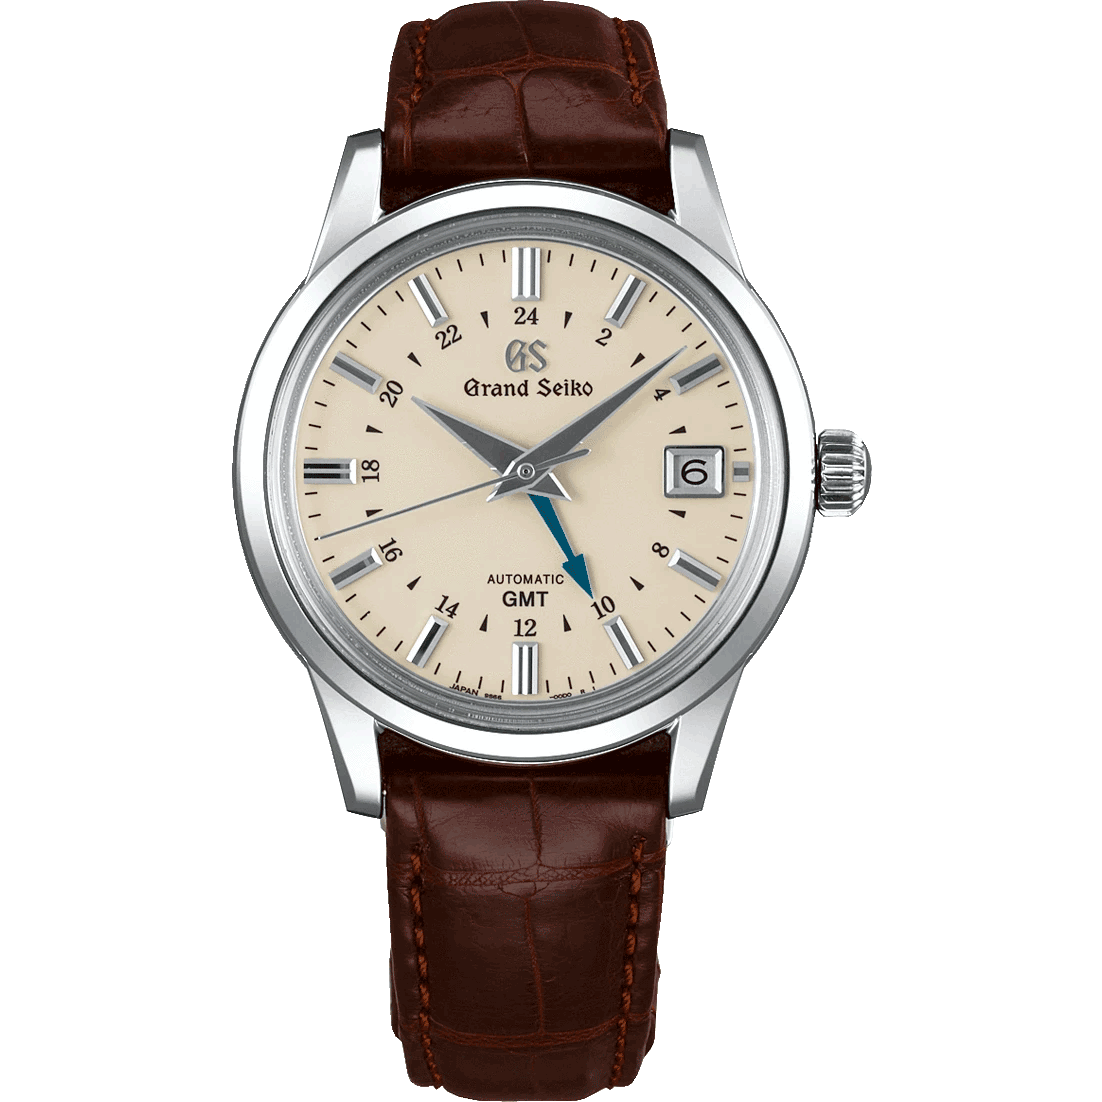 Grand Seiko Automatic GMT SBGM221 Strap Watch – Grand Seiko